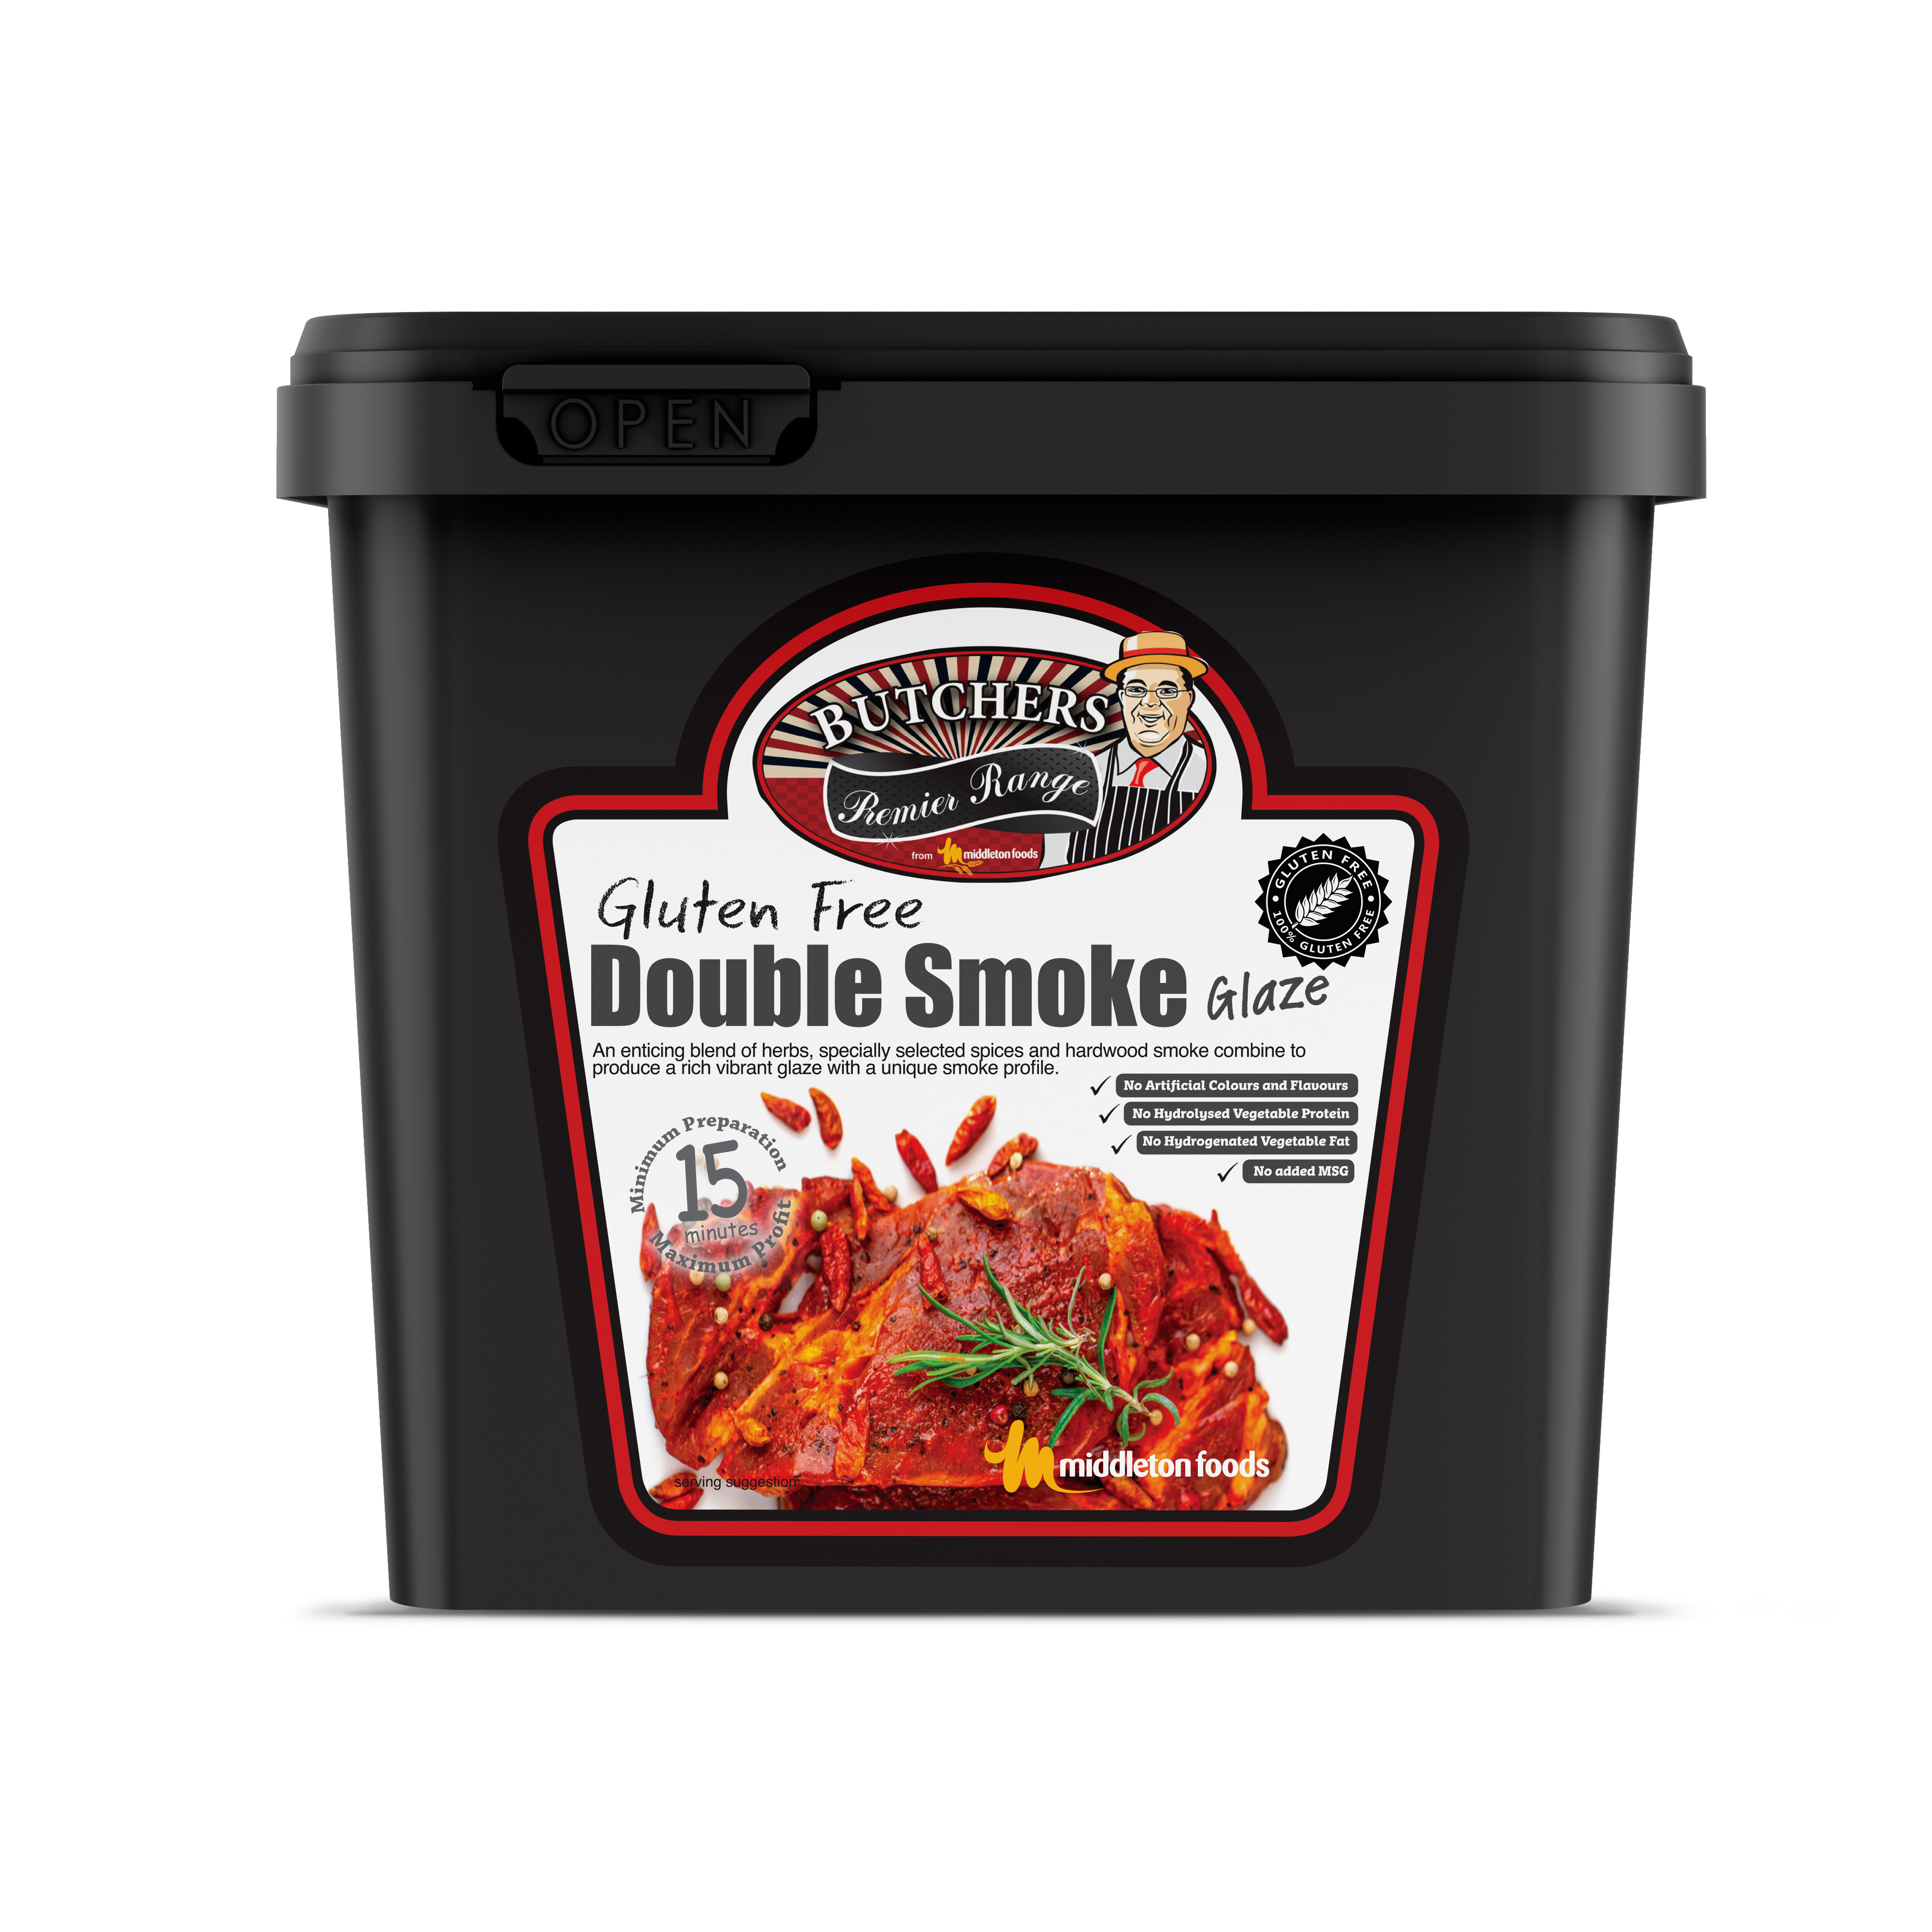 https://middletonfoods.com/wp-content/uploads/2021/02/MF-Black-Tub-double-smoke.png